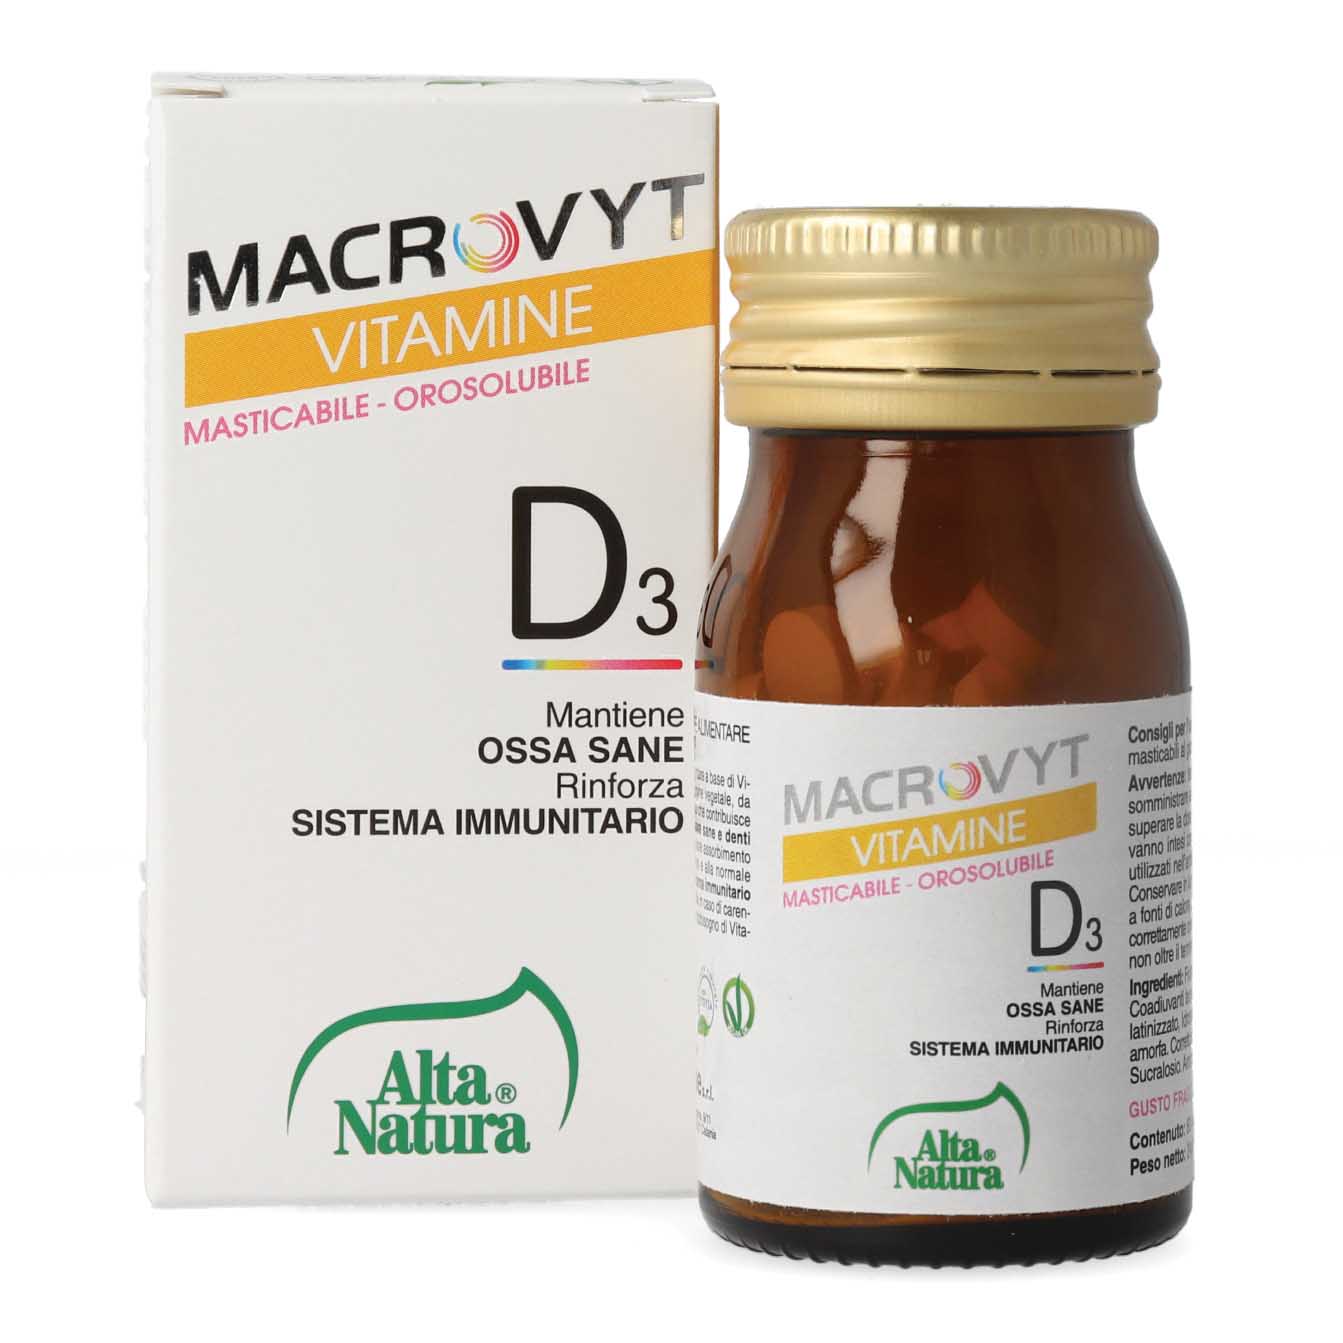 ALTA NATURA Macrovyt vitamina d3 veg 60 compresse orosolubili